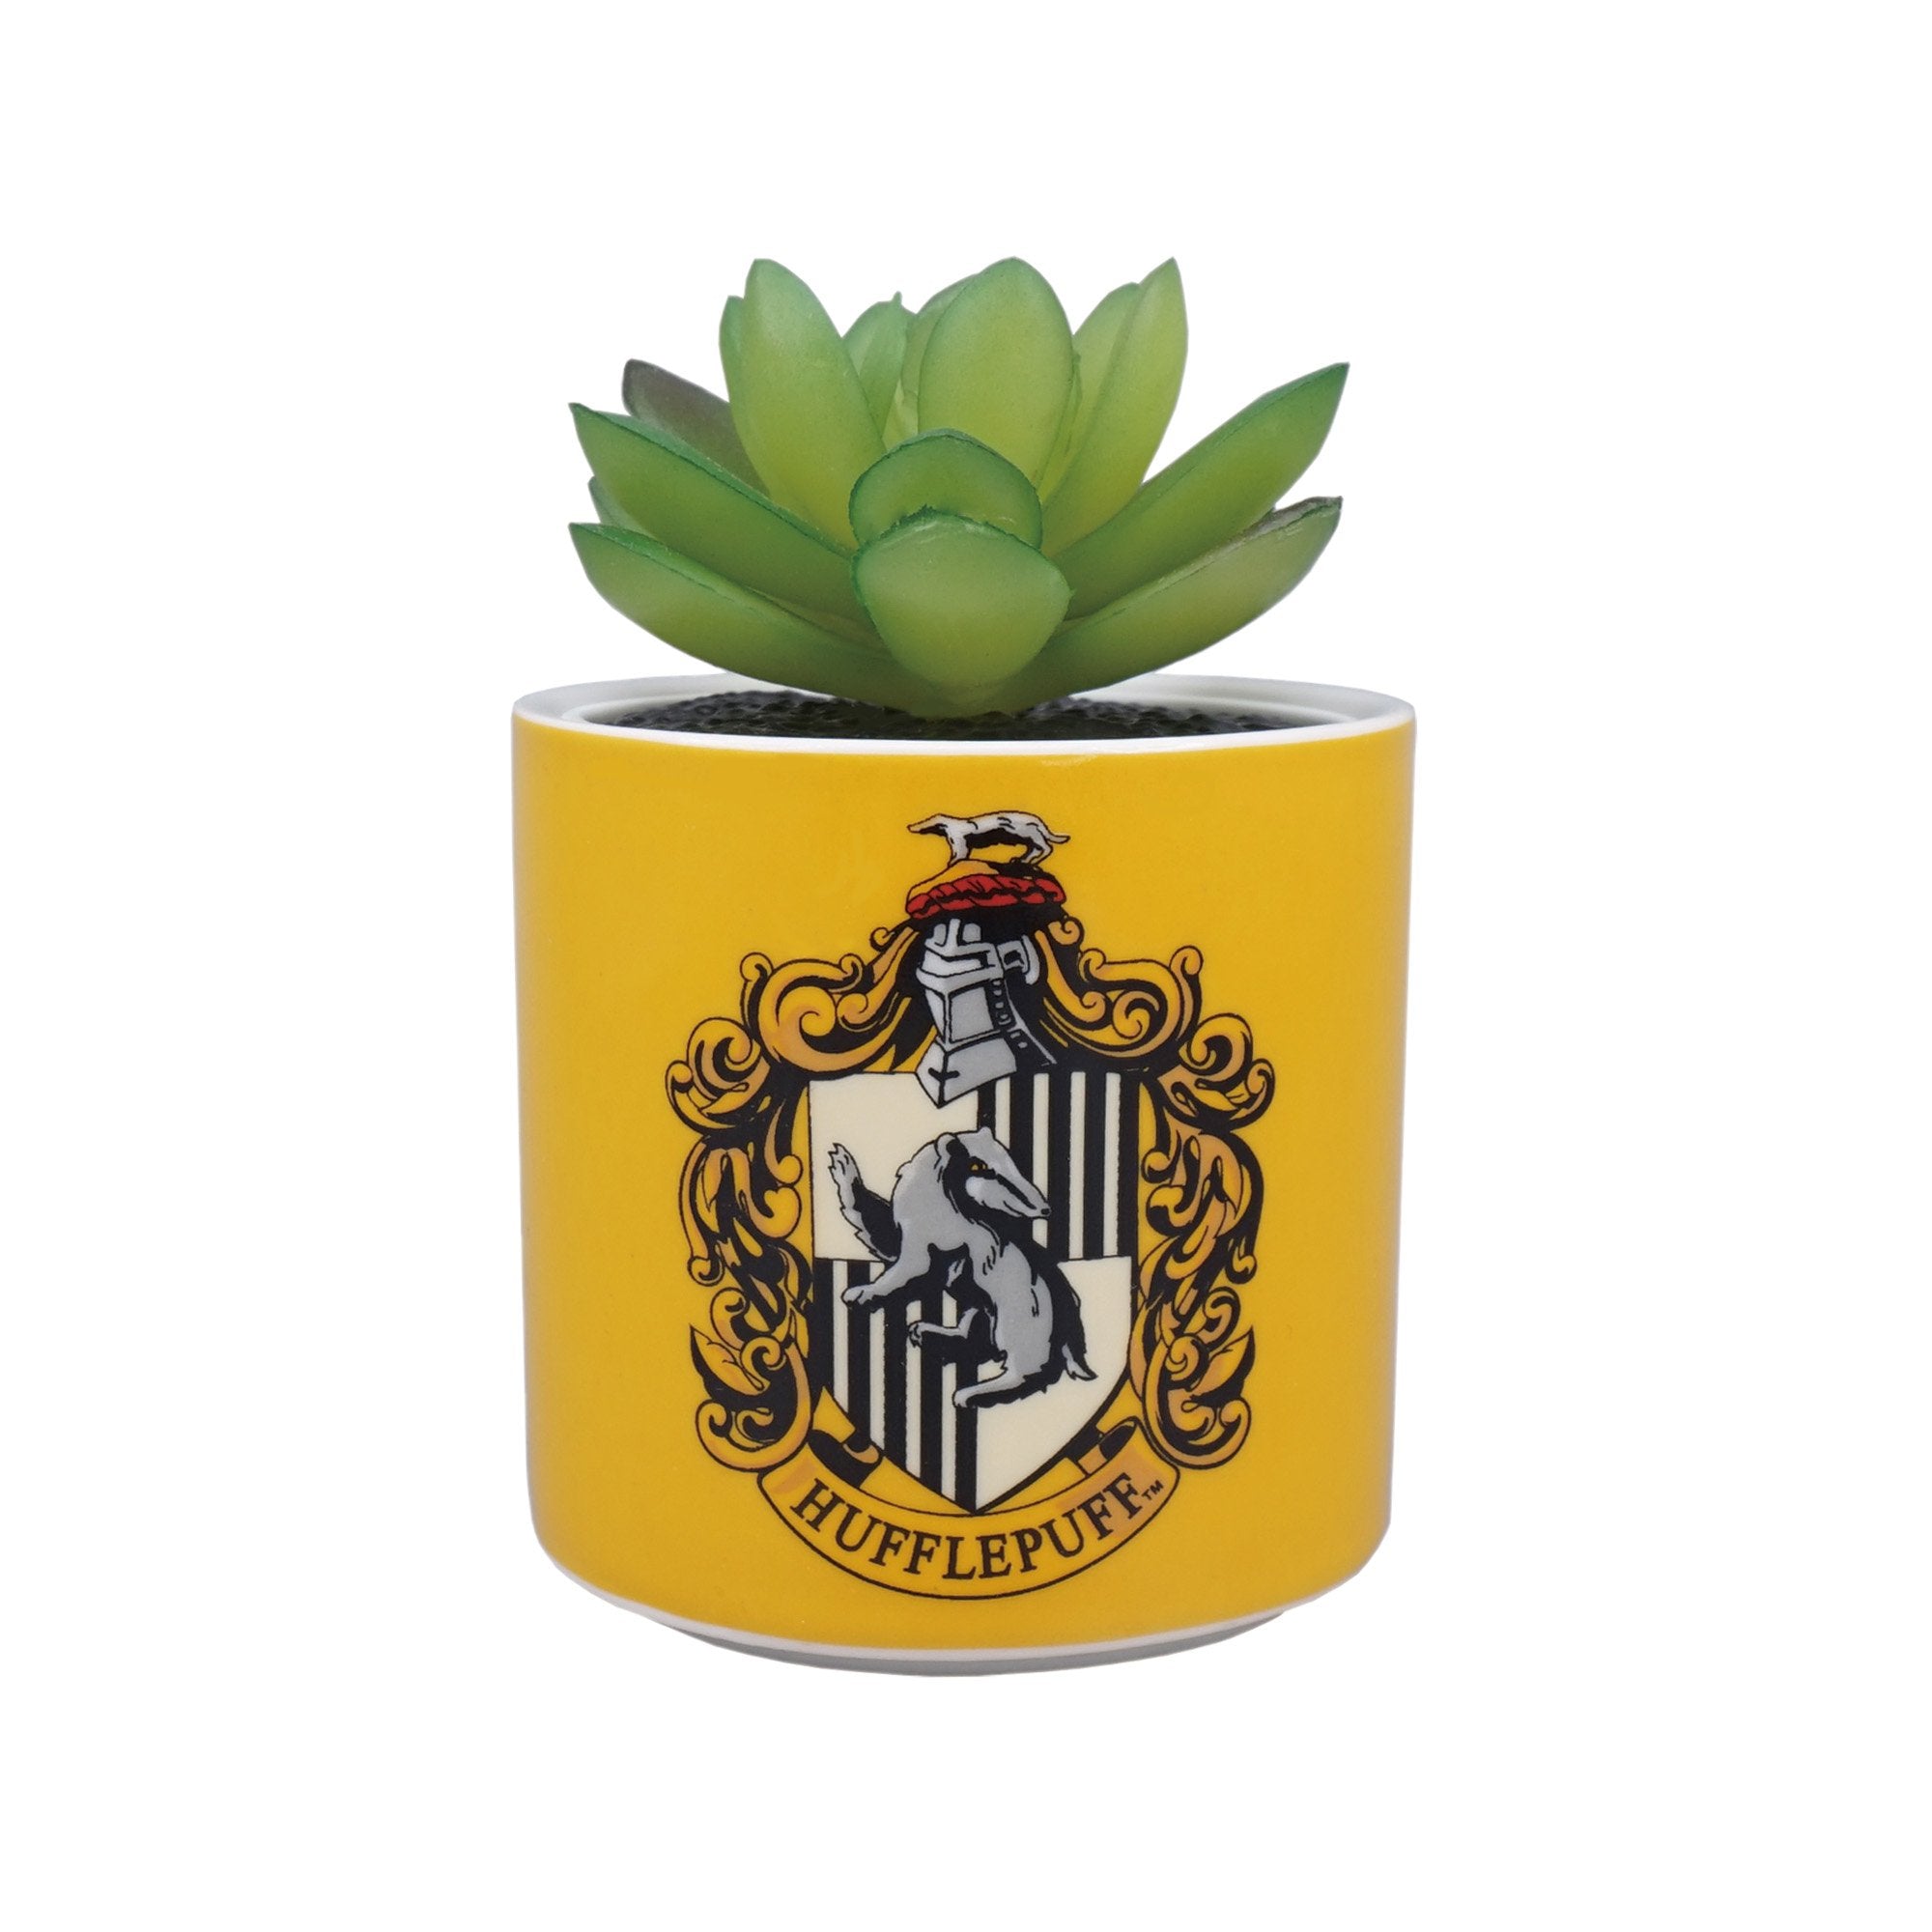 Plant Pot Faux Boxed (6.5cm) - Harry Potter (Hufflepuff)